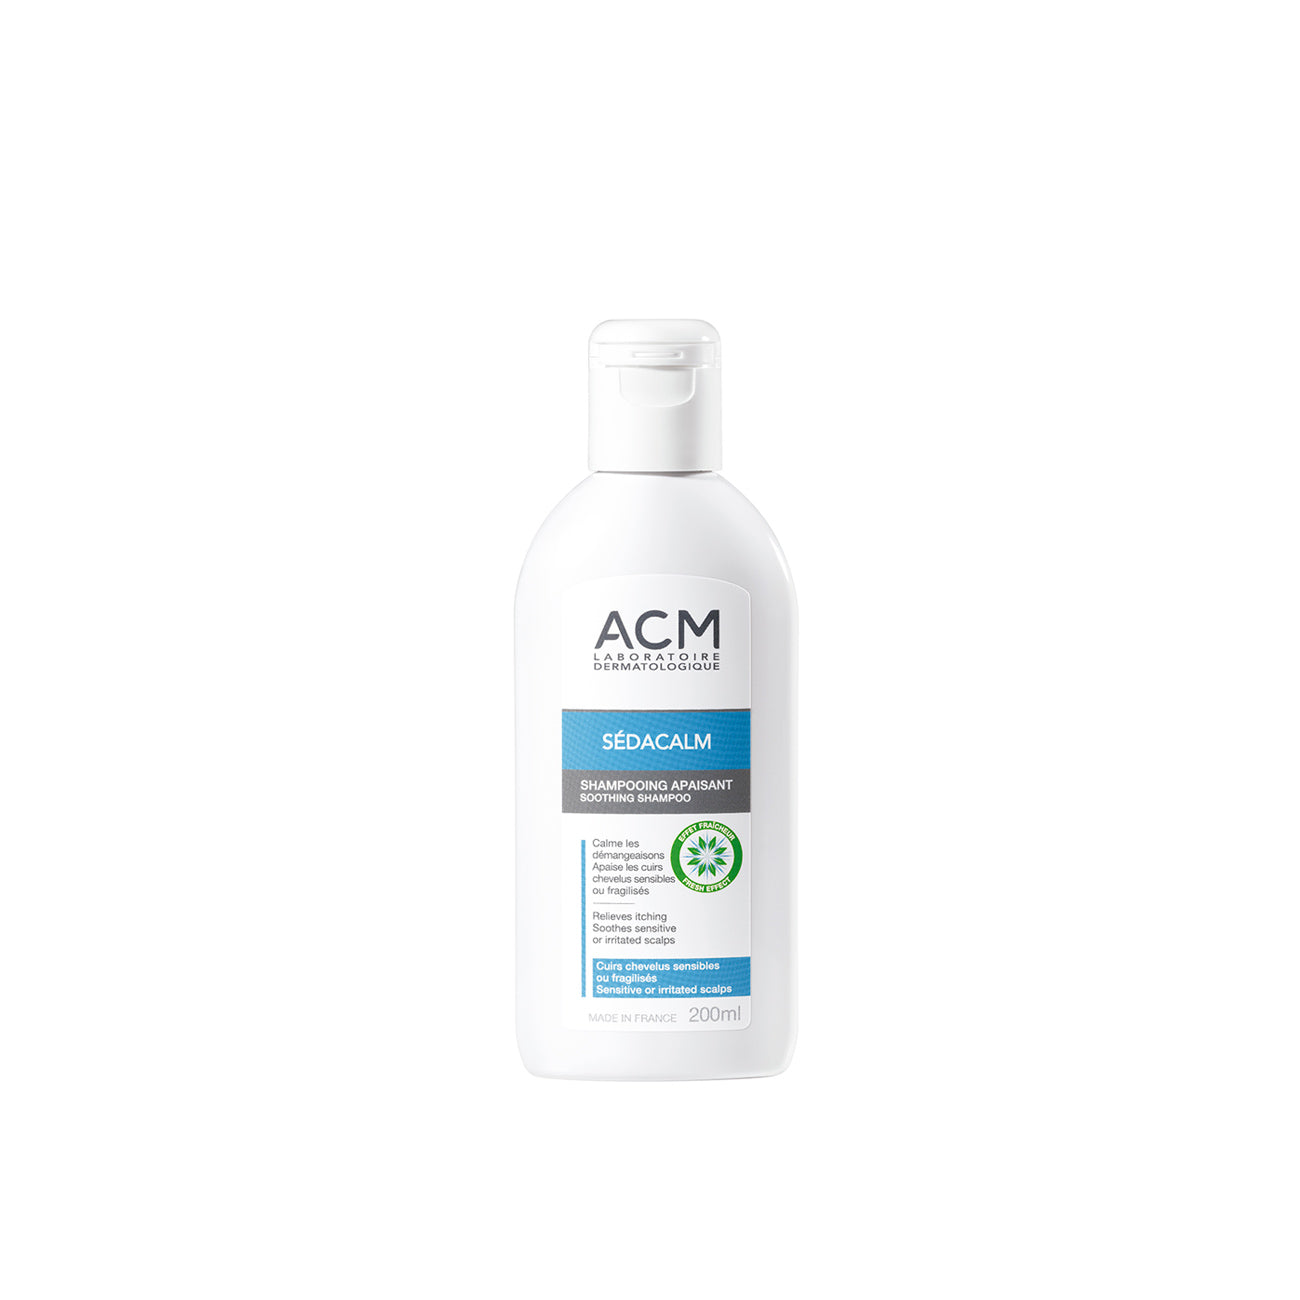 acm sedacalm shampoo